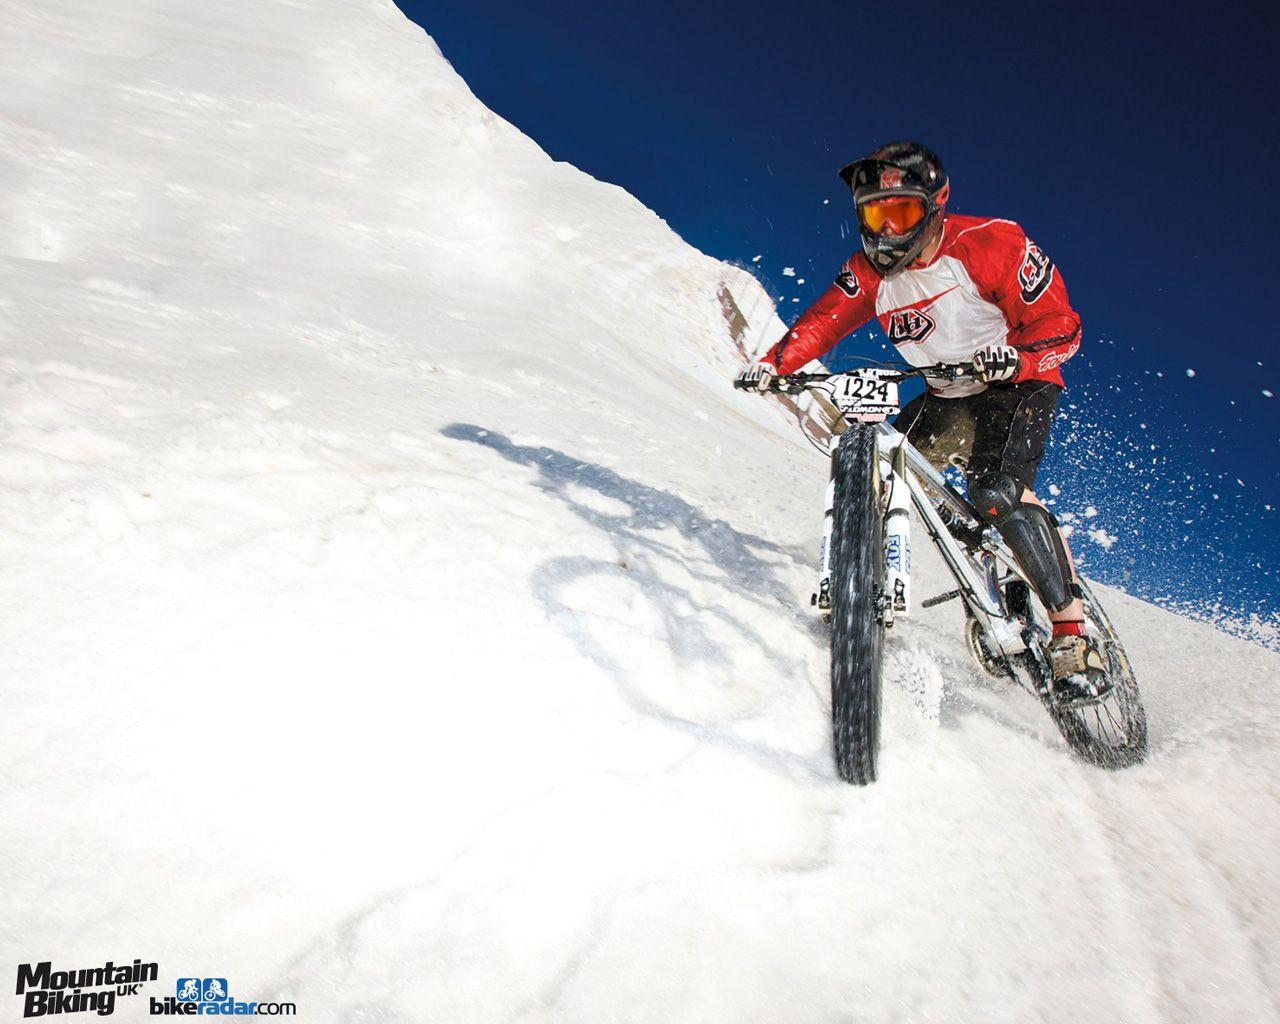 Download wallpaper: wallpaper velo, bike, snow, bicycle